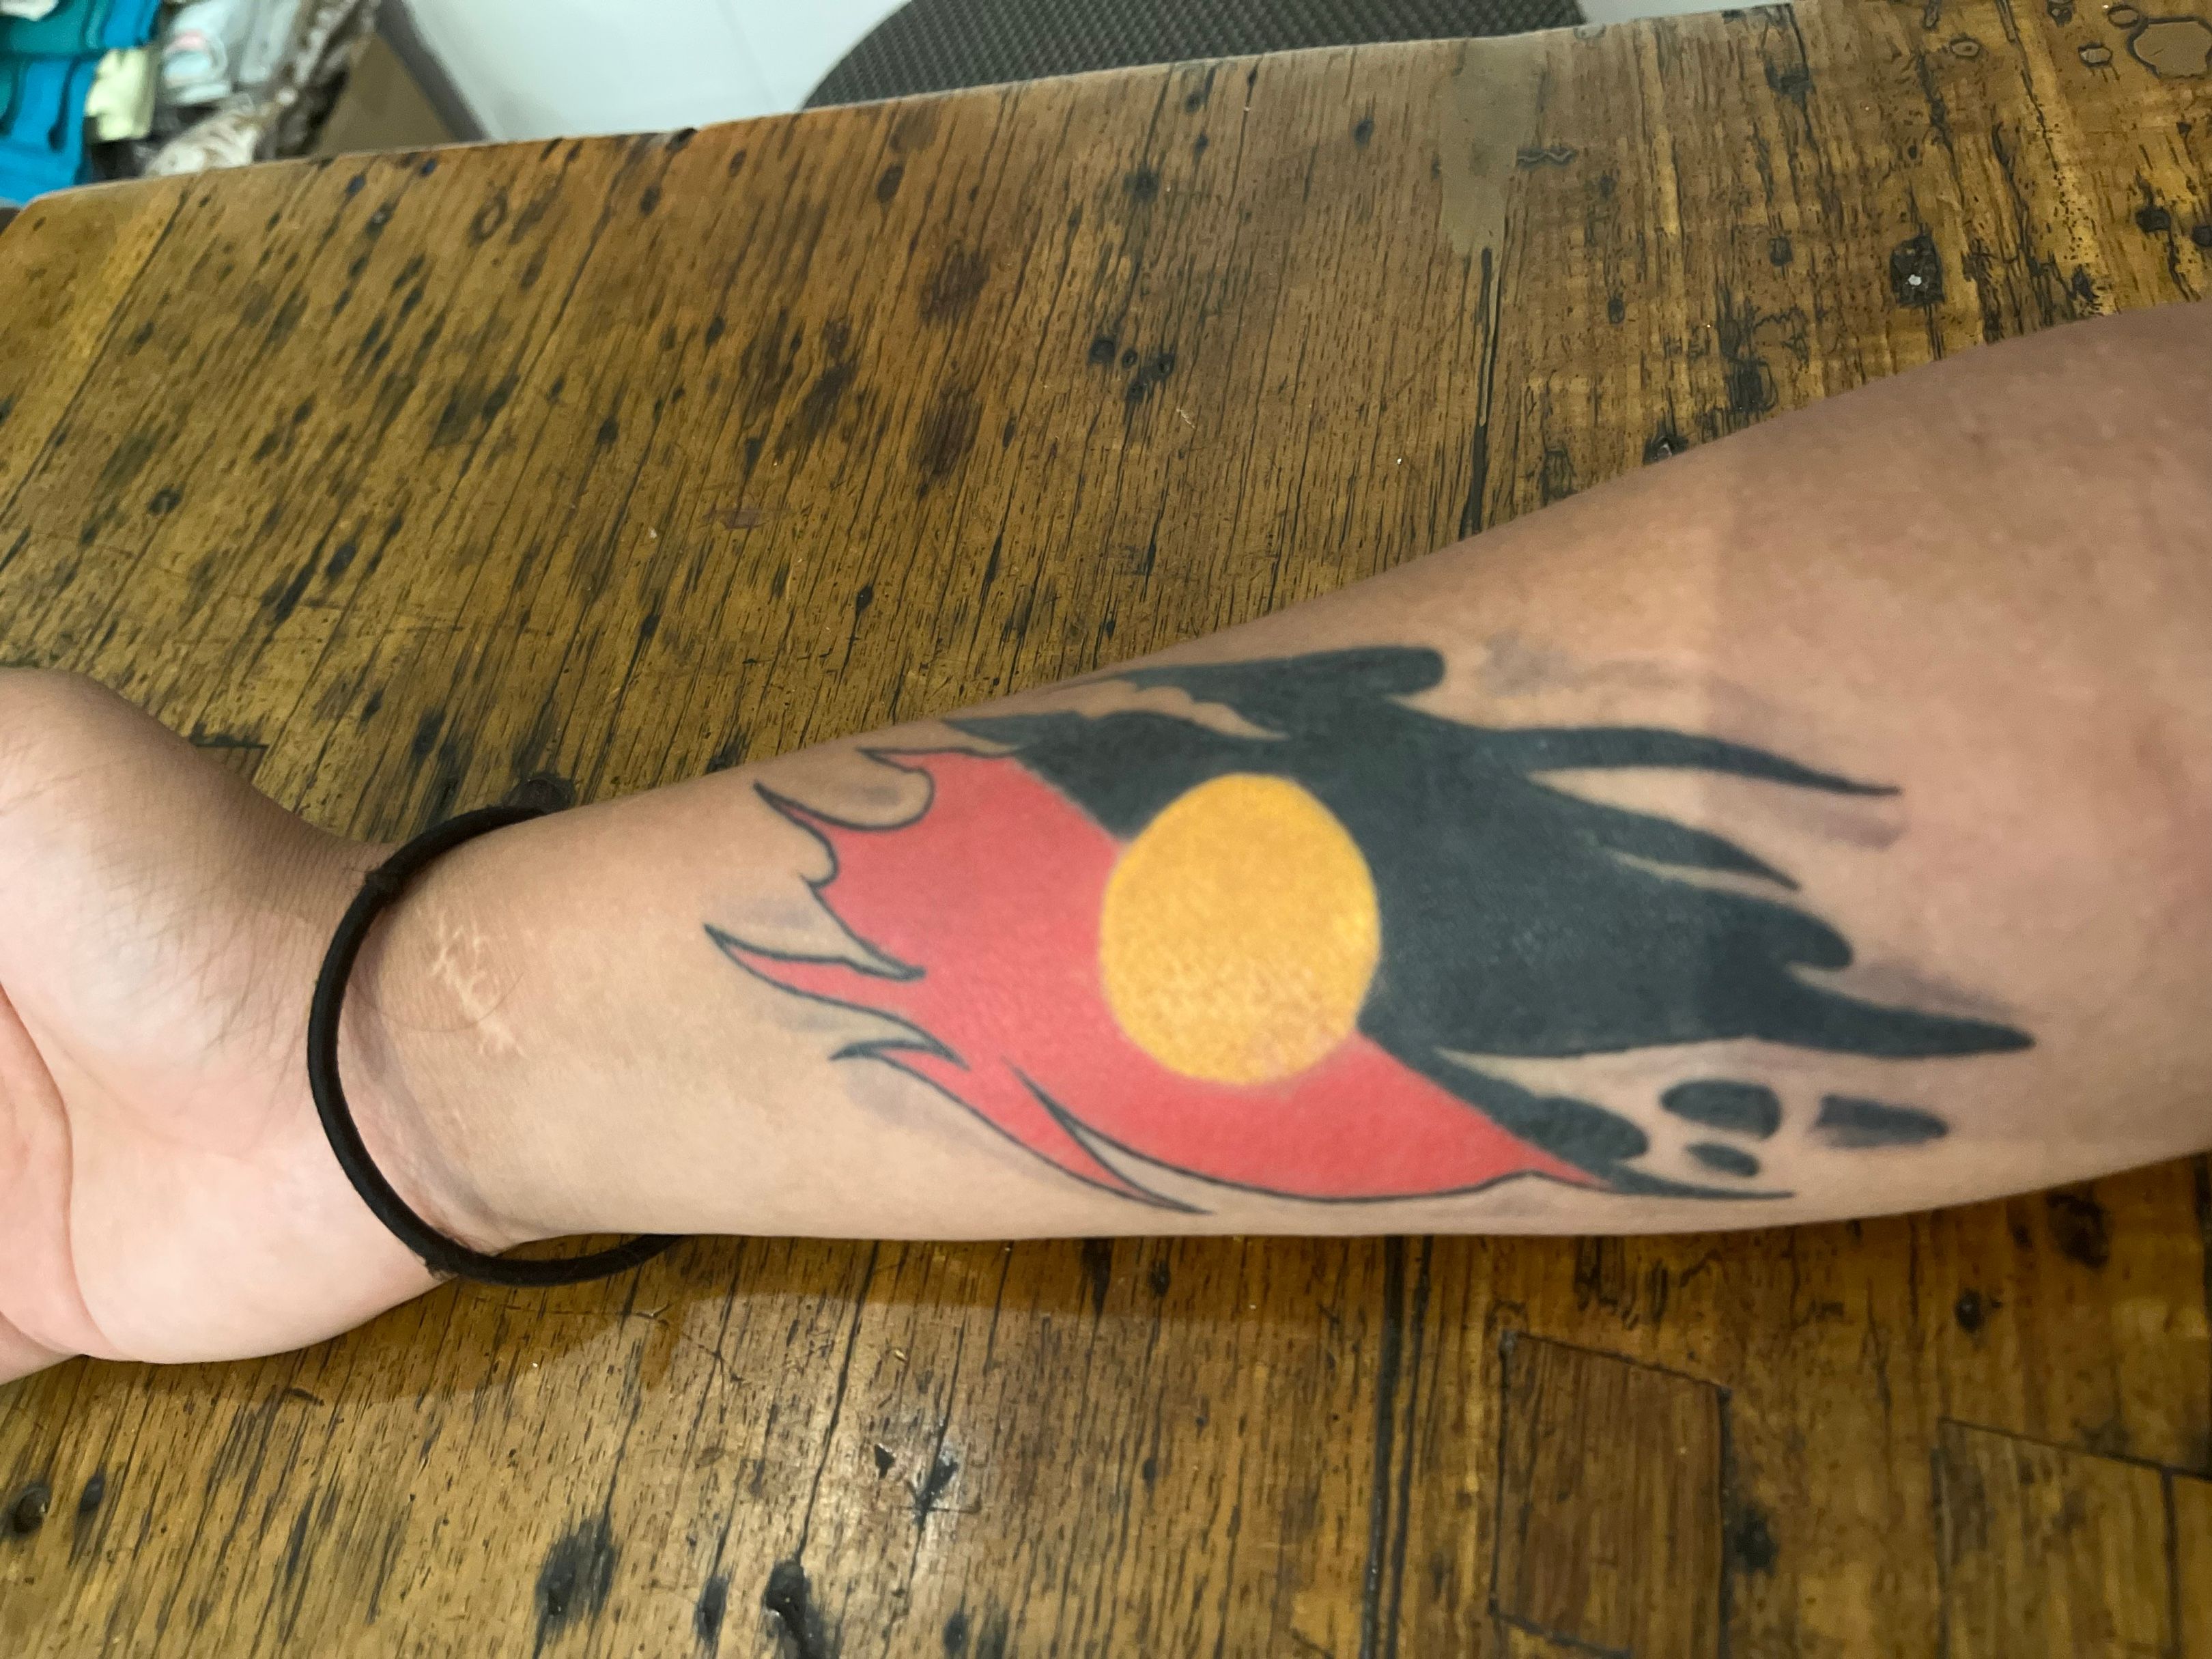 Best Tattoo Artists and Studios doing Aboriginal tattoos